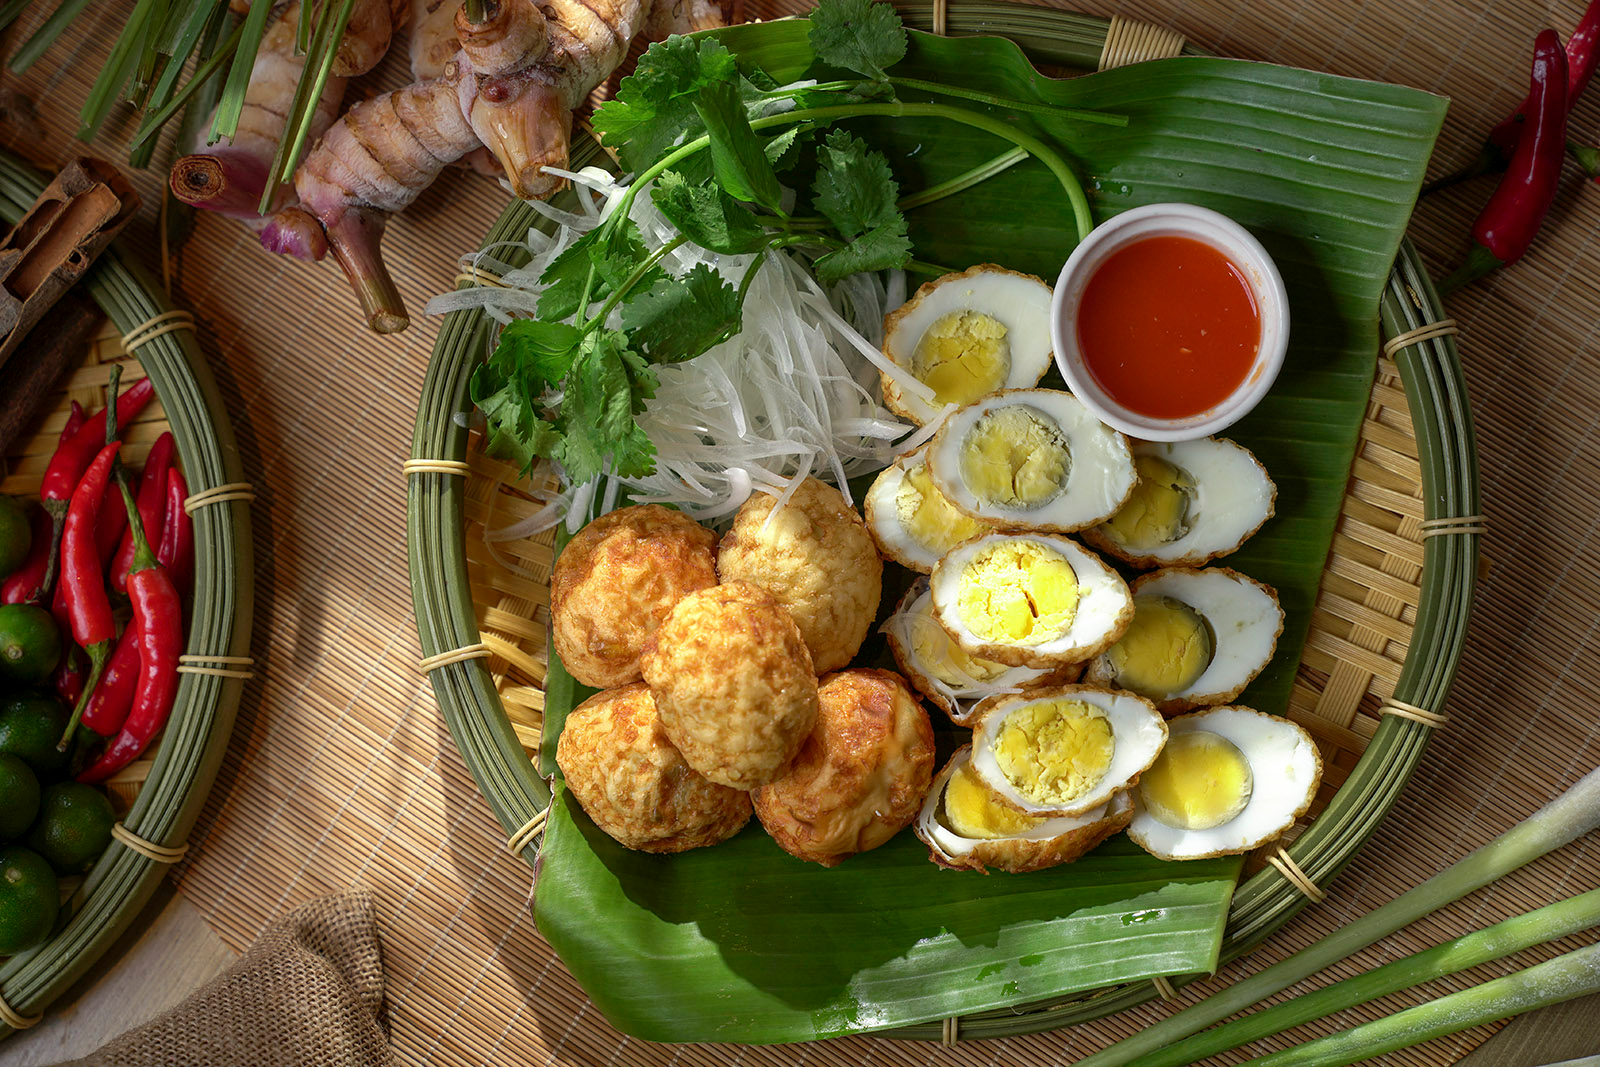 Sunny Buffet Vietnamese cuisine Fried Egg with Kumquat Chili Sauce